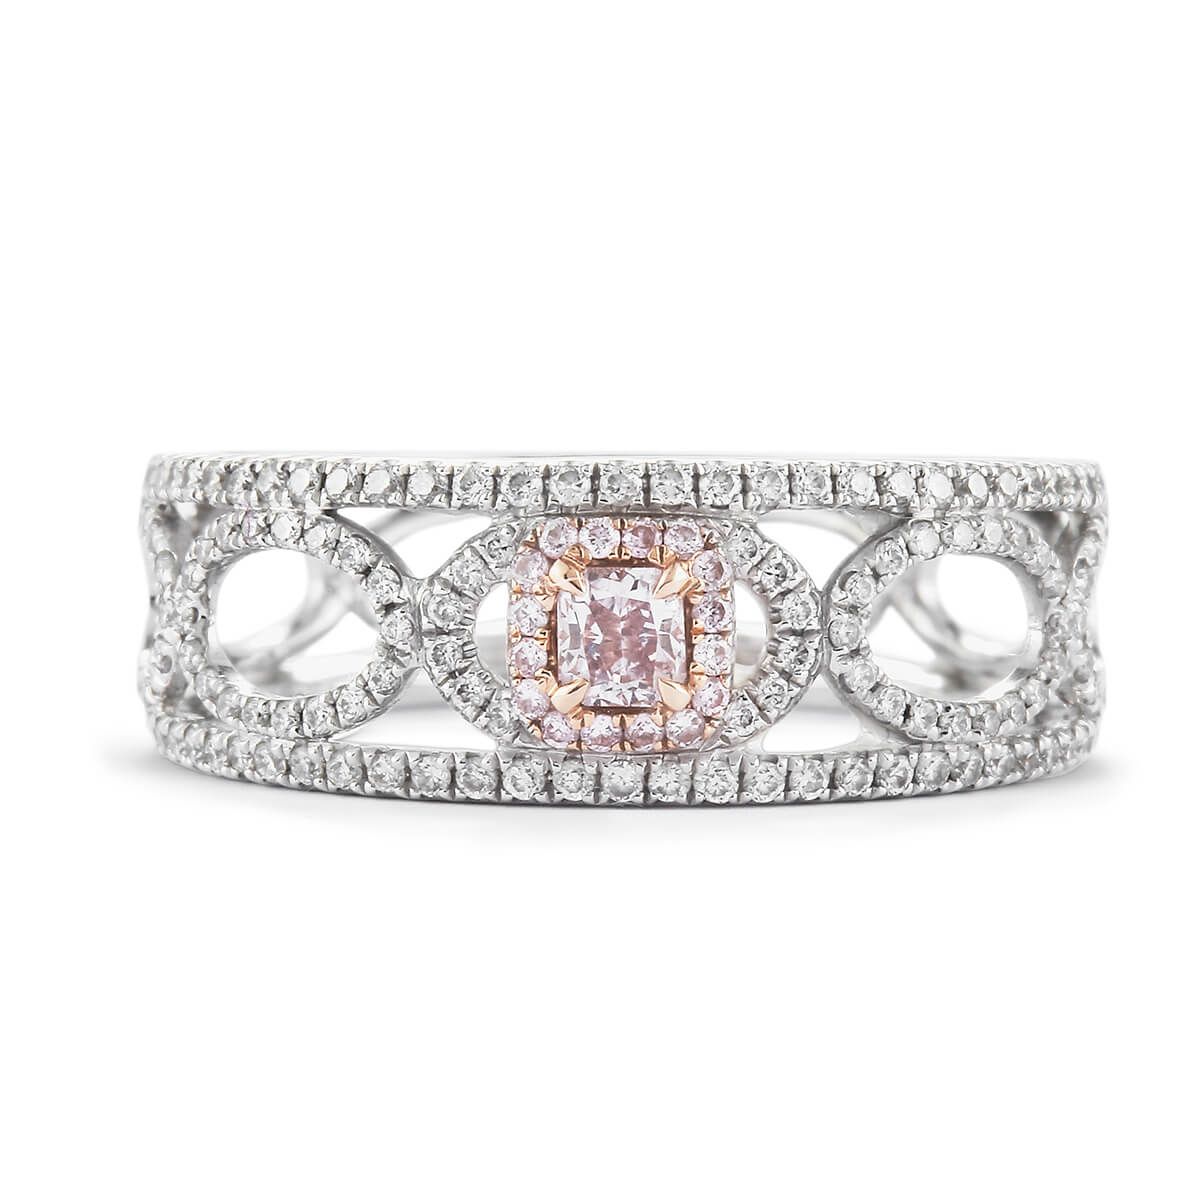 Fancy Pink Diamond Ring, 0.13 Ct. (0.51 Ct. TW), Cushion shape